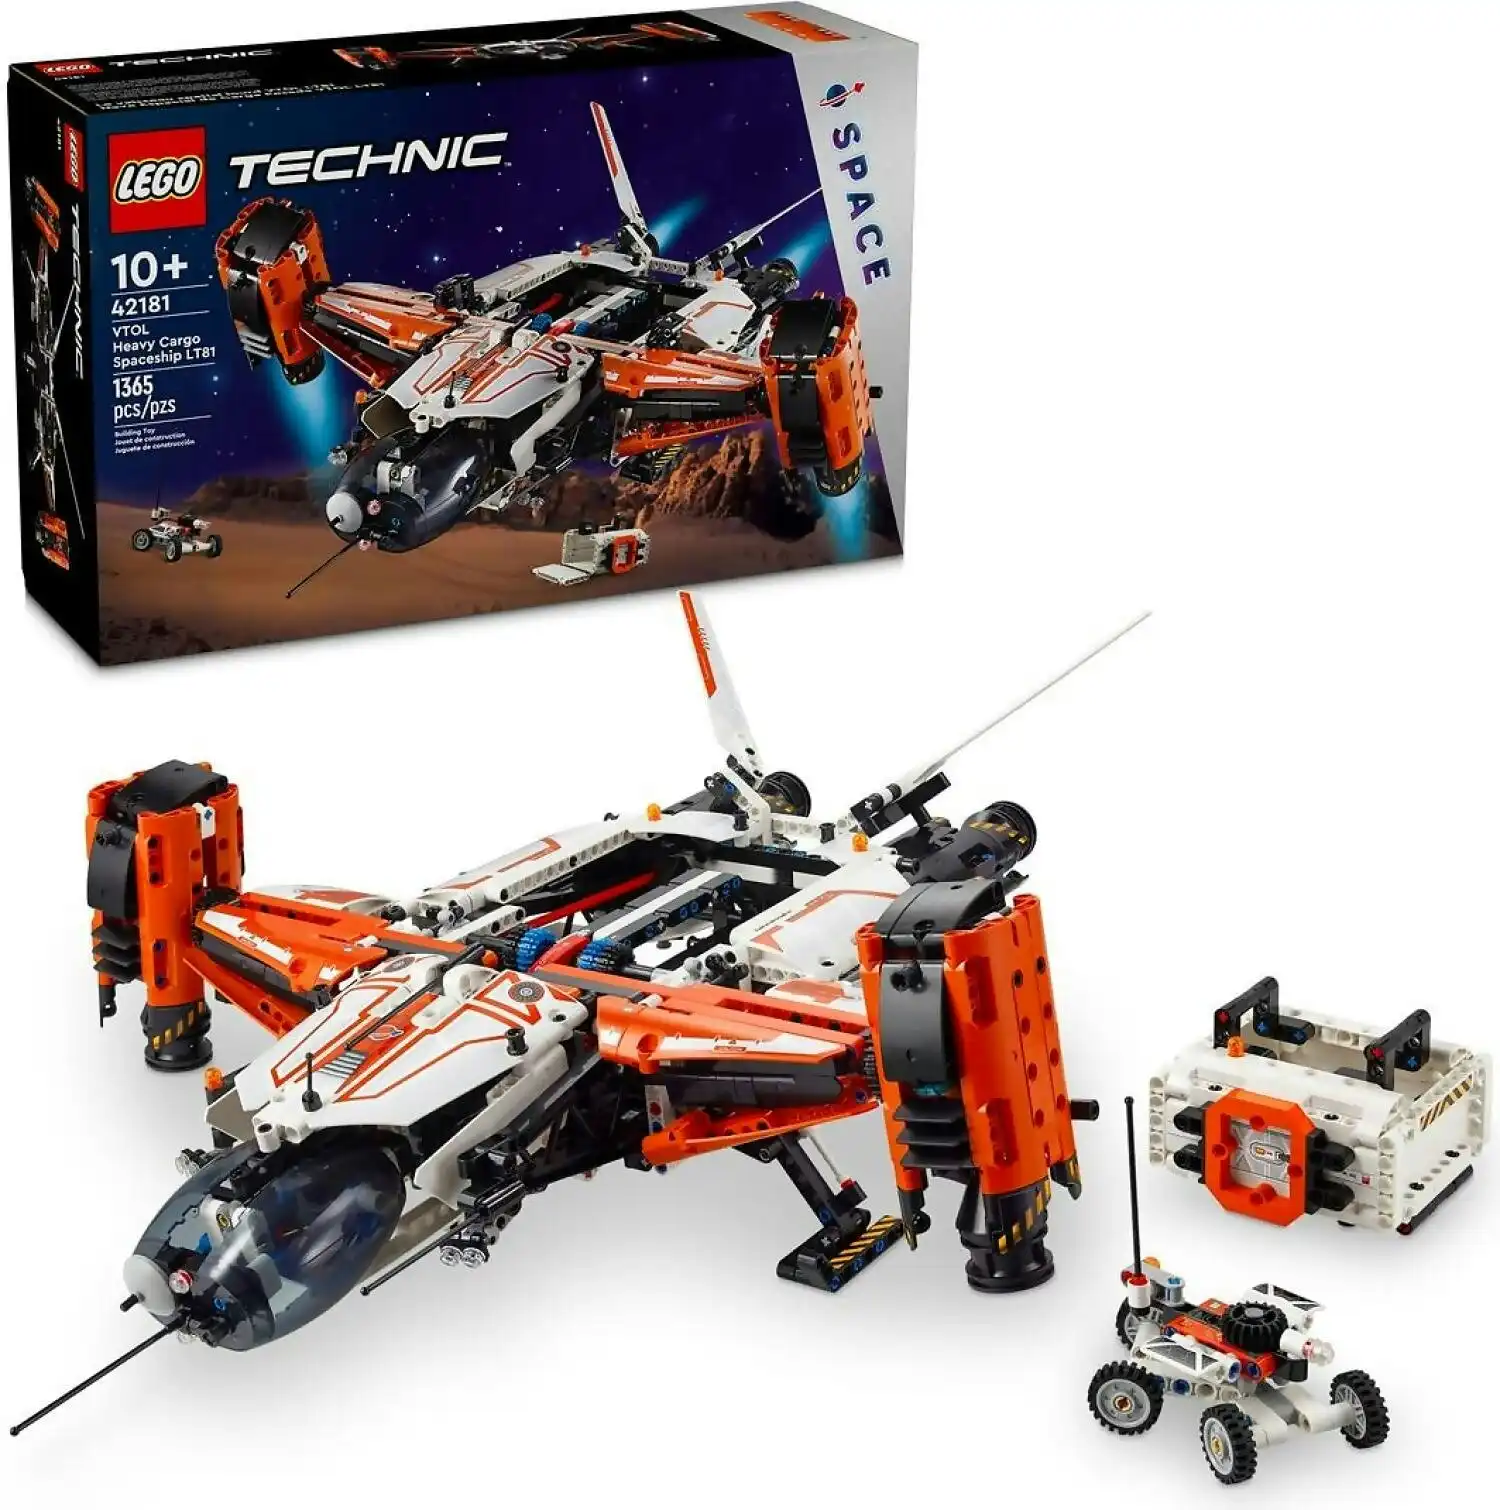 LEGO 42181 VTOL Heavy Cargo Spaceship LT81 - Technic